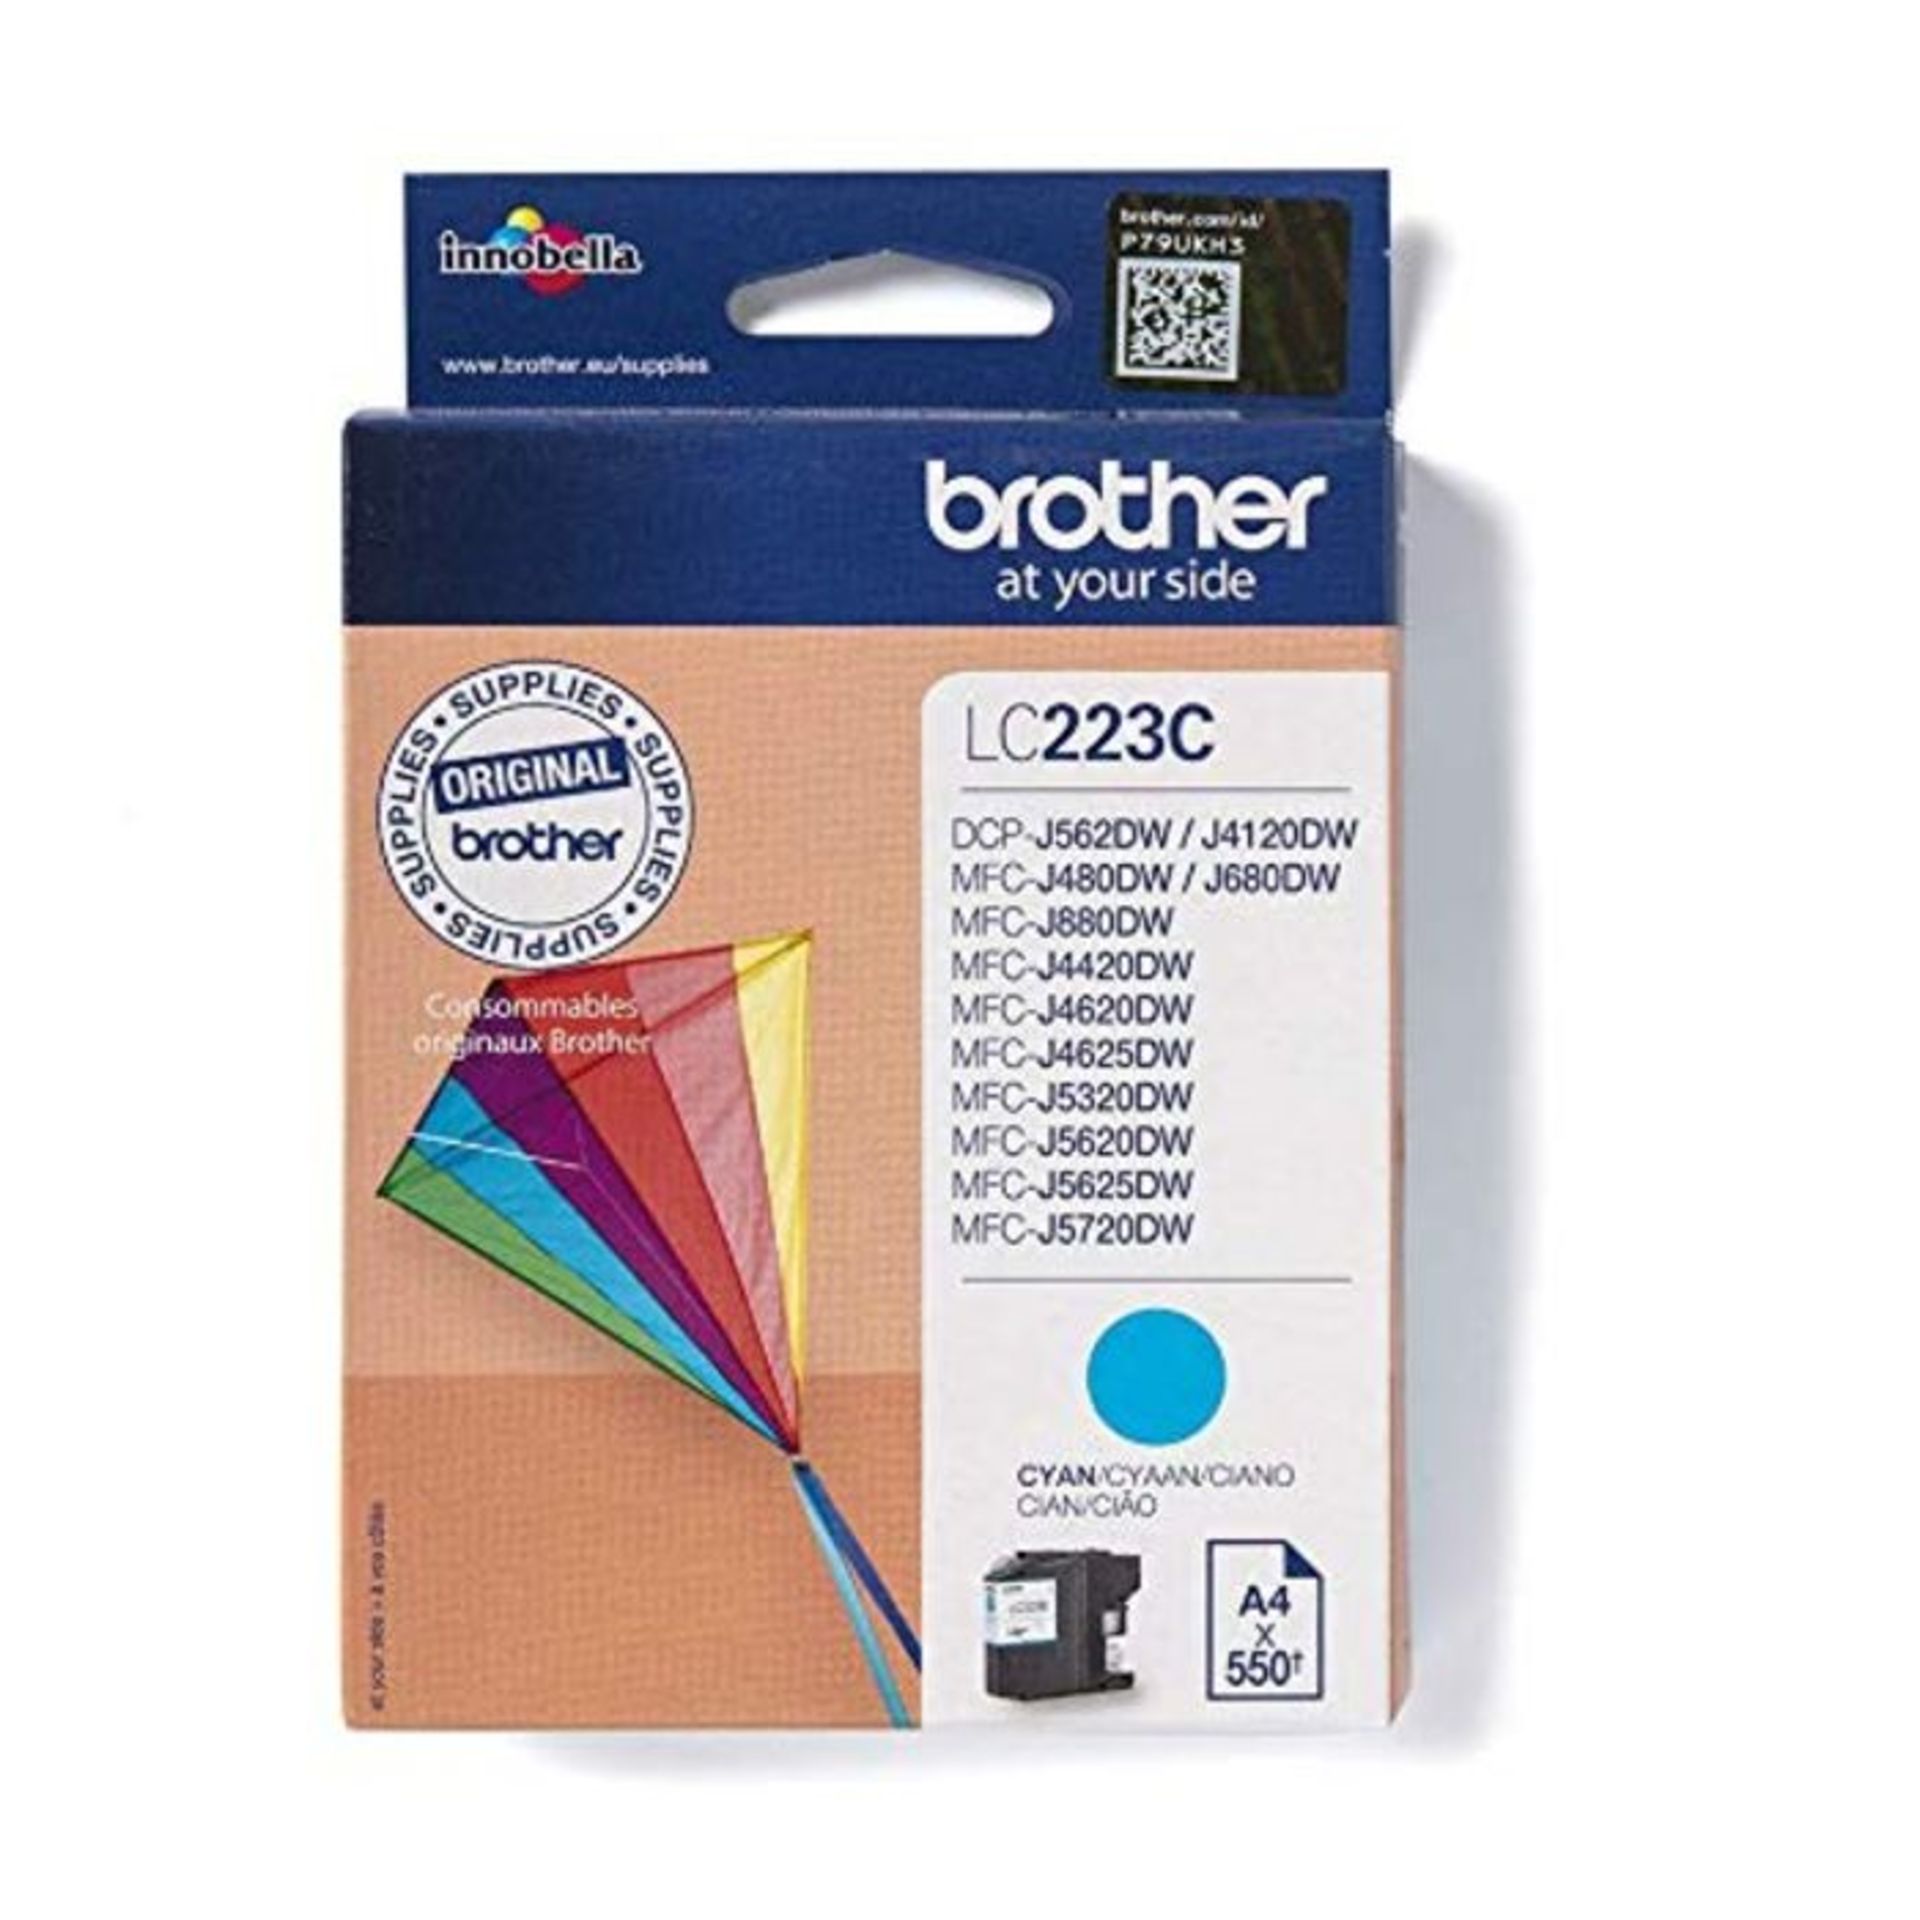 Brother LC-223C Inkjet Cartridge, Cyan, Single Pack, High Yield, Includes 1 x Inkjet C